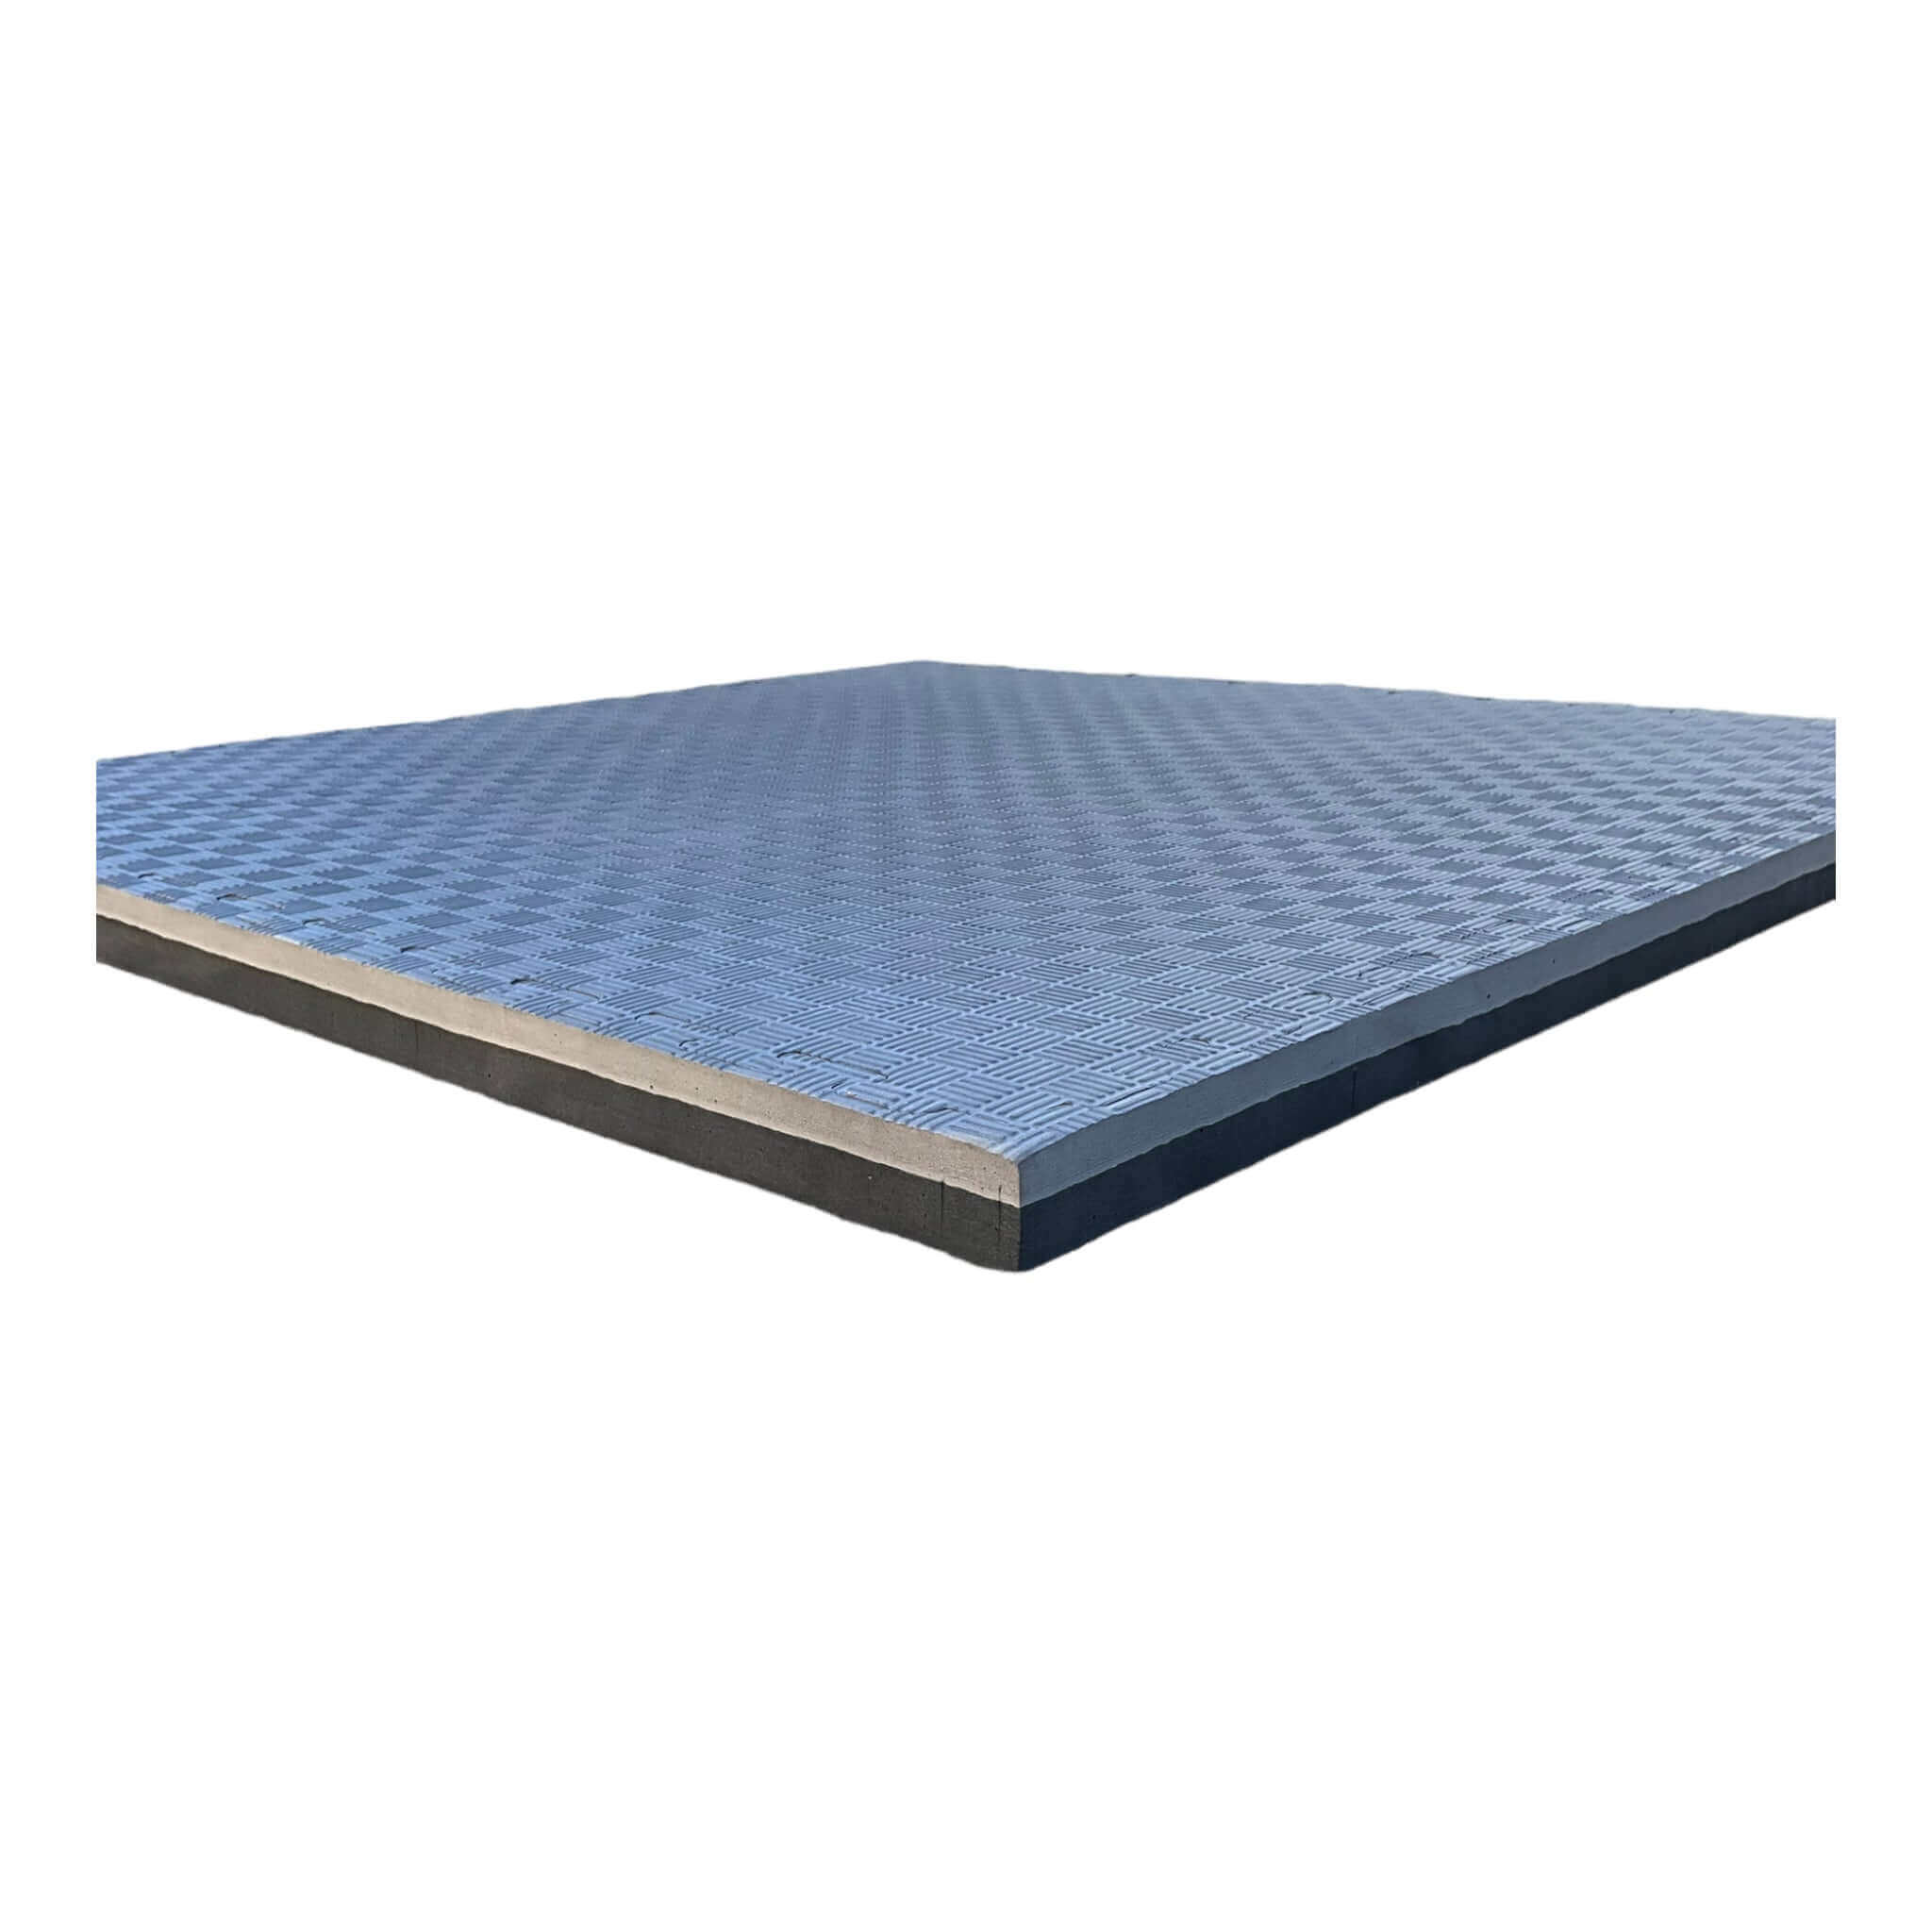 40mm EVA Foam Jigsaw Interlocking Floor Tile Mat 1m x 1m BLACK / GREY | INSOURCE